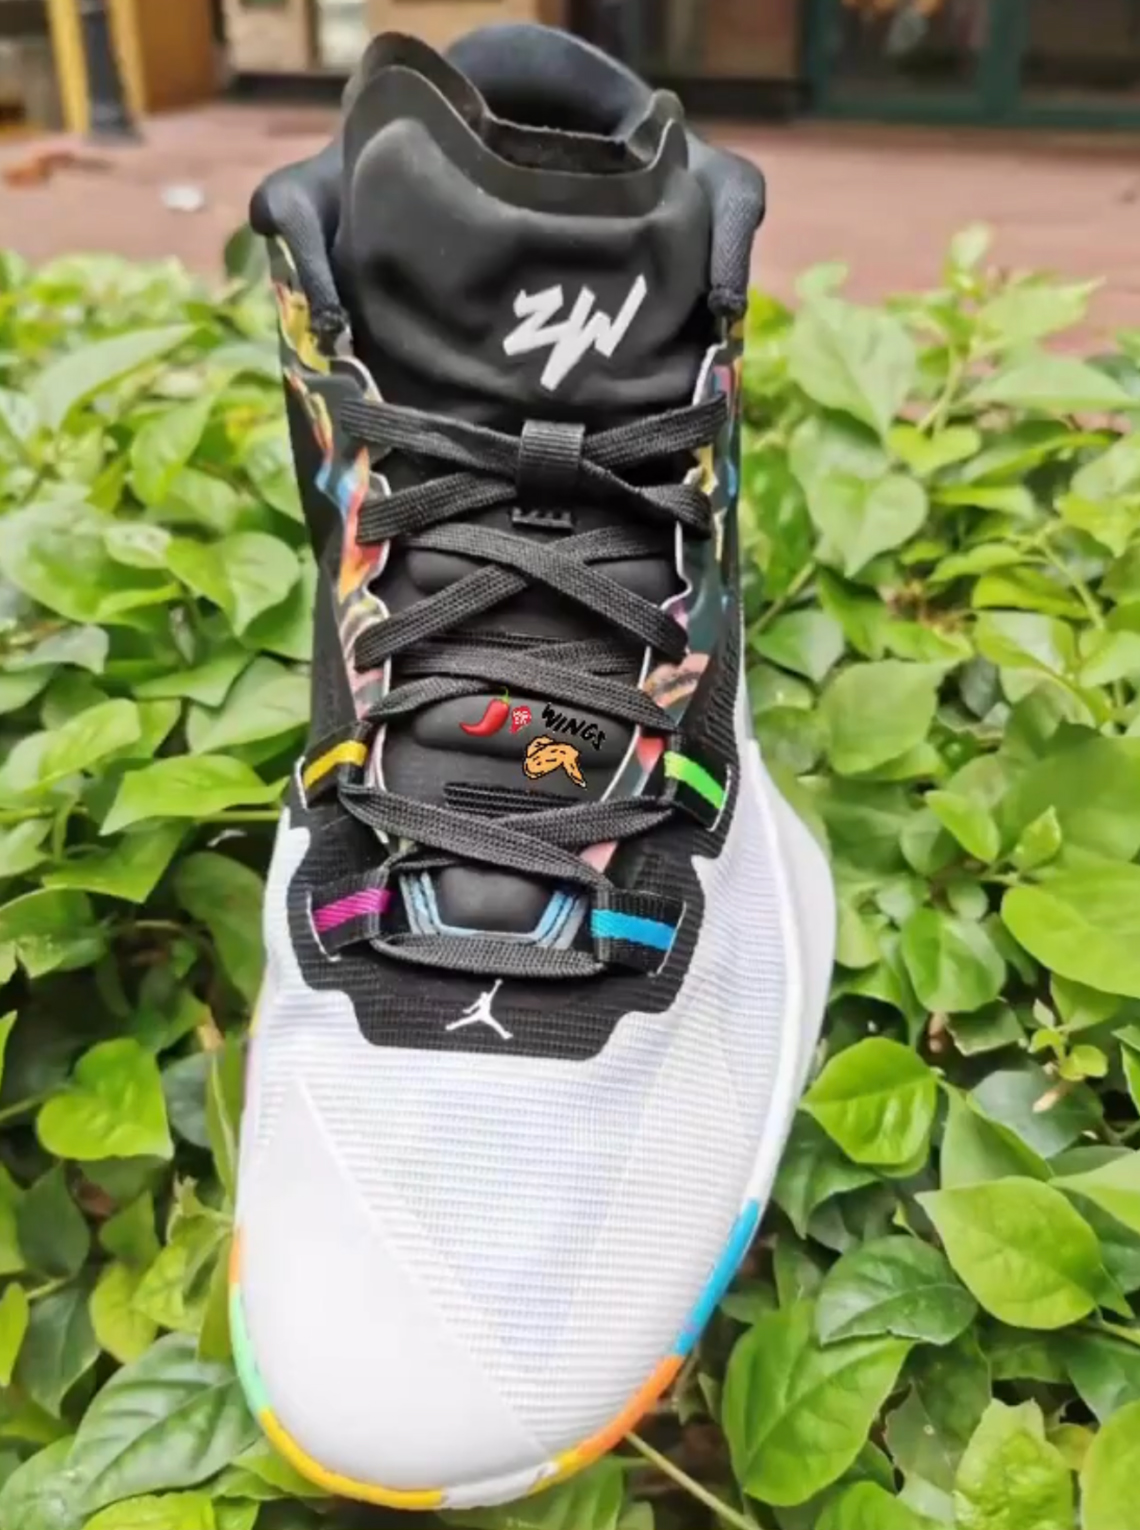 Jayson Tatum To Receive His Own Signature Jordan Brand Sneaker In 2023 -  Sneaker News